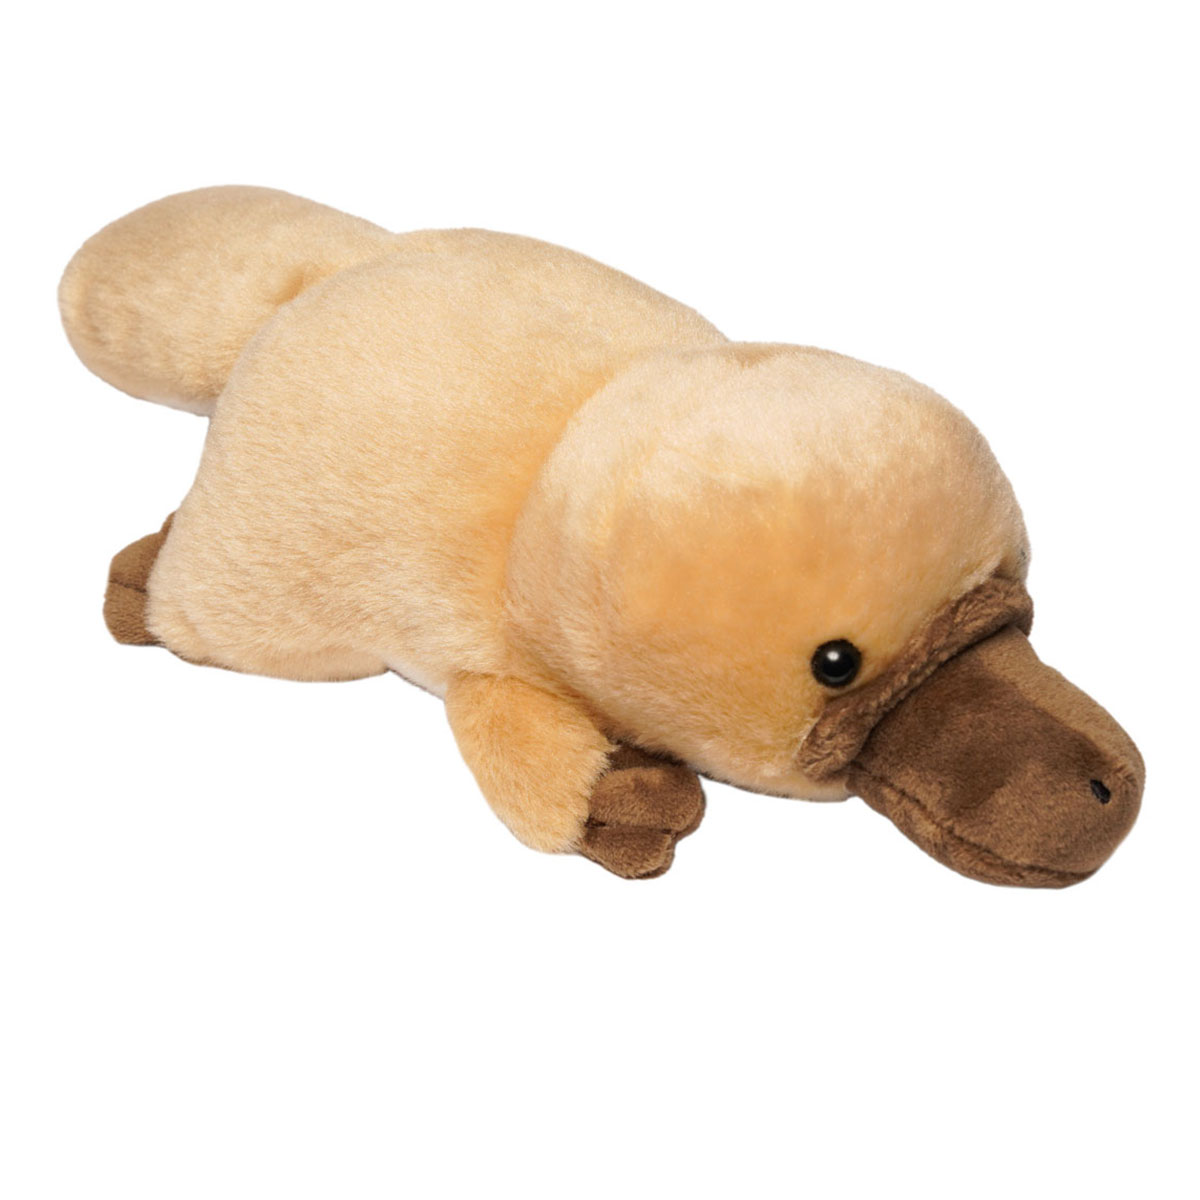 Platypus Plushie Kawaii Stuffed Animal Toy Light Brown Standard Size 11 Inches